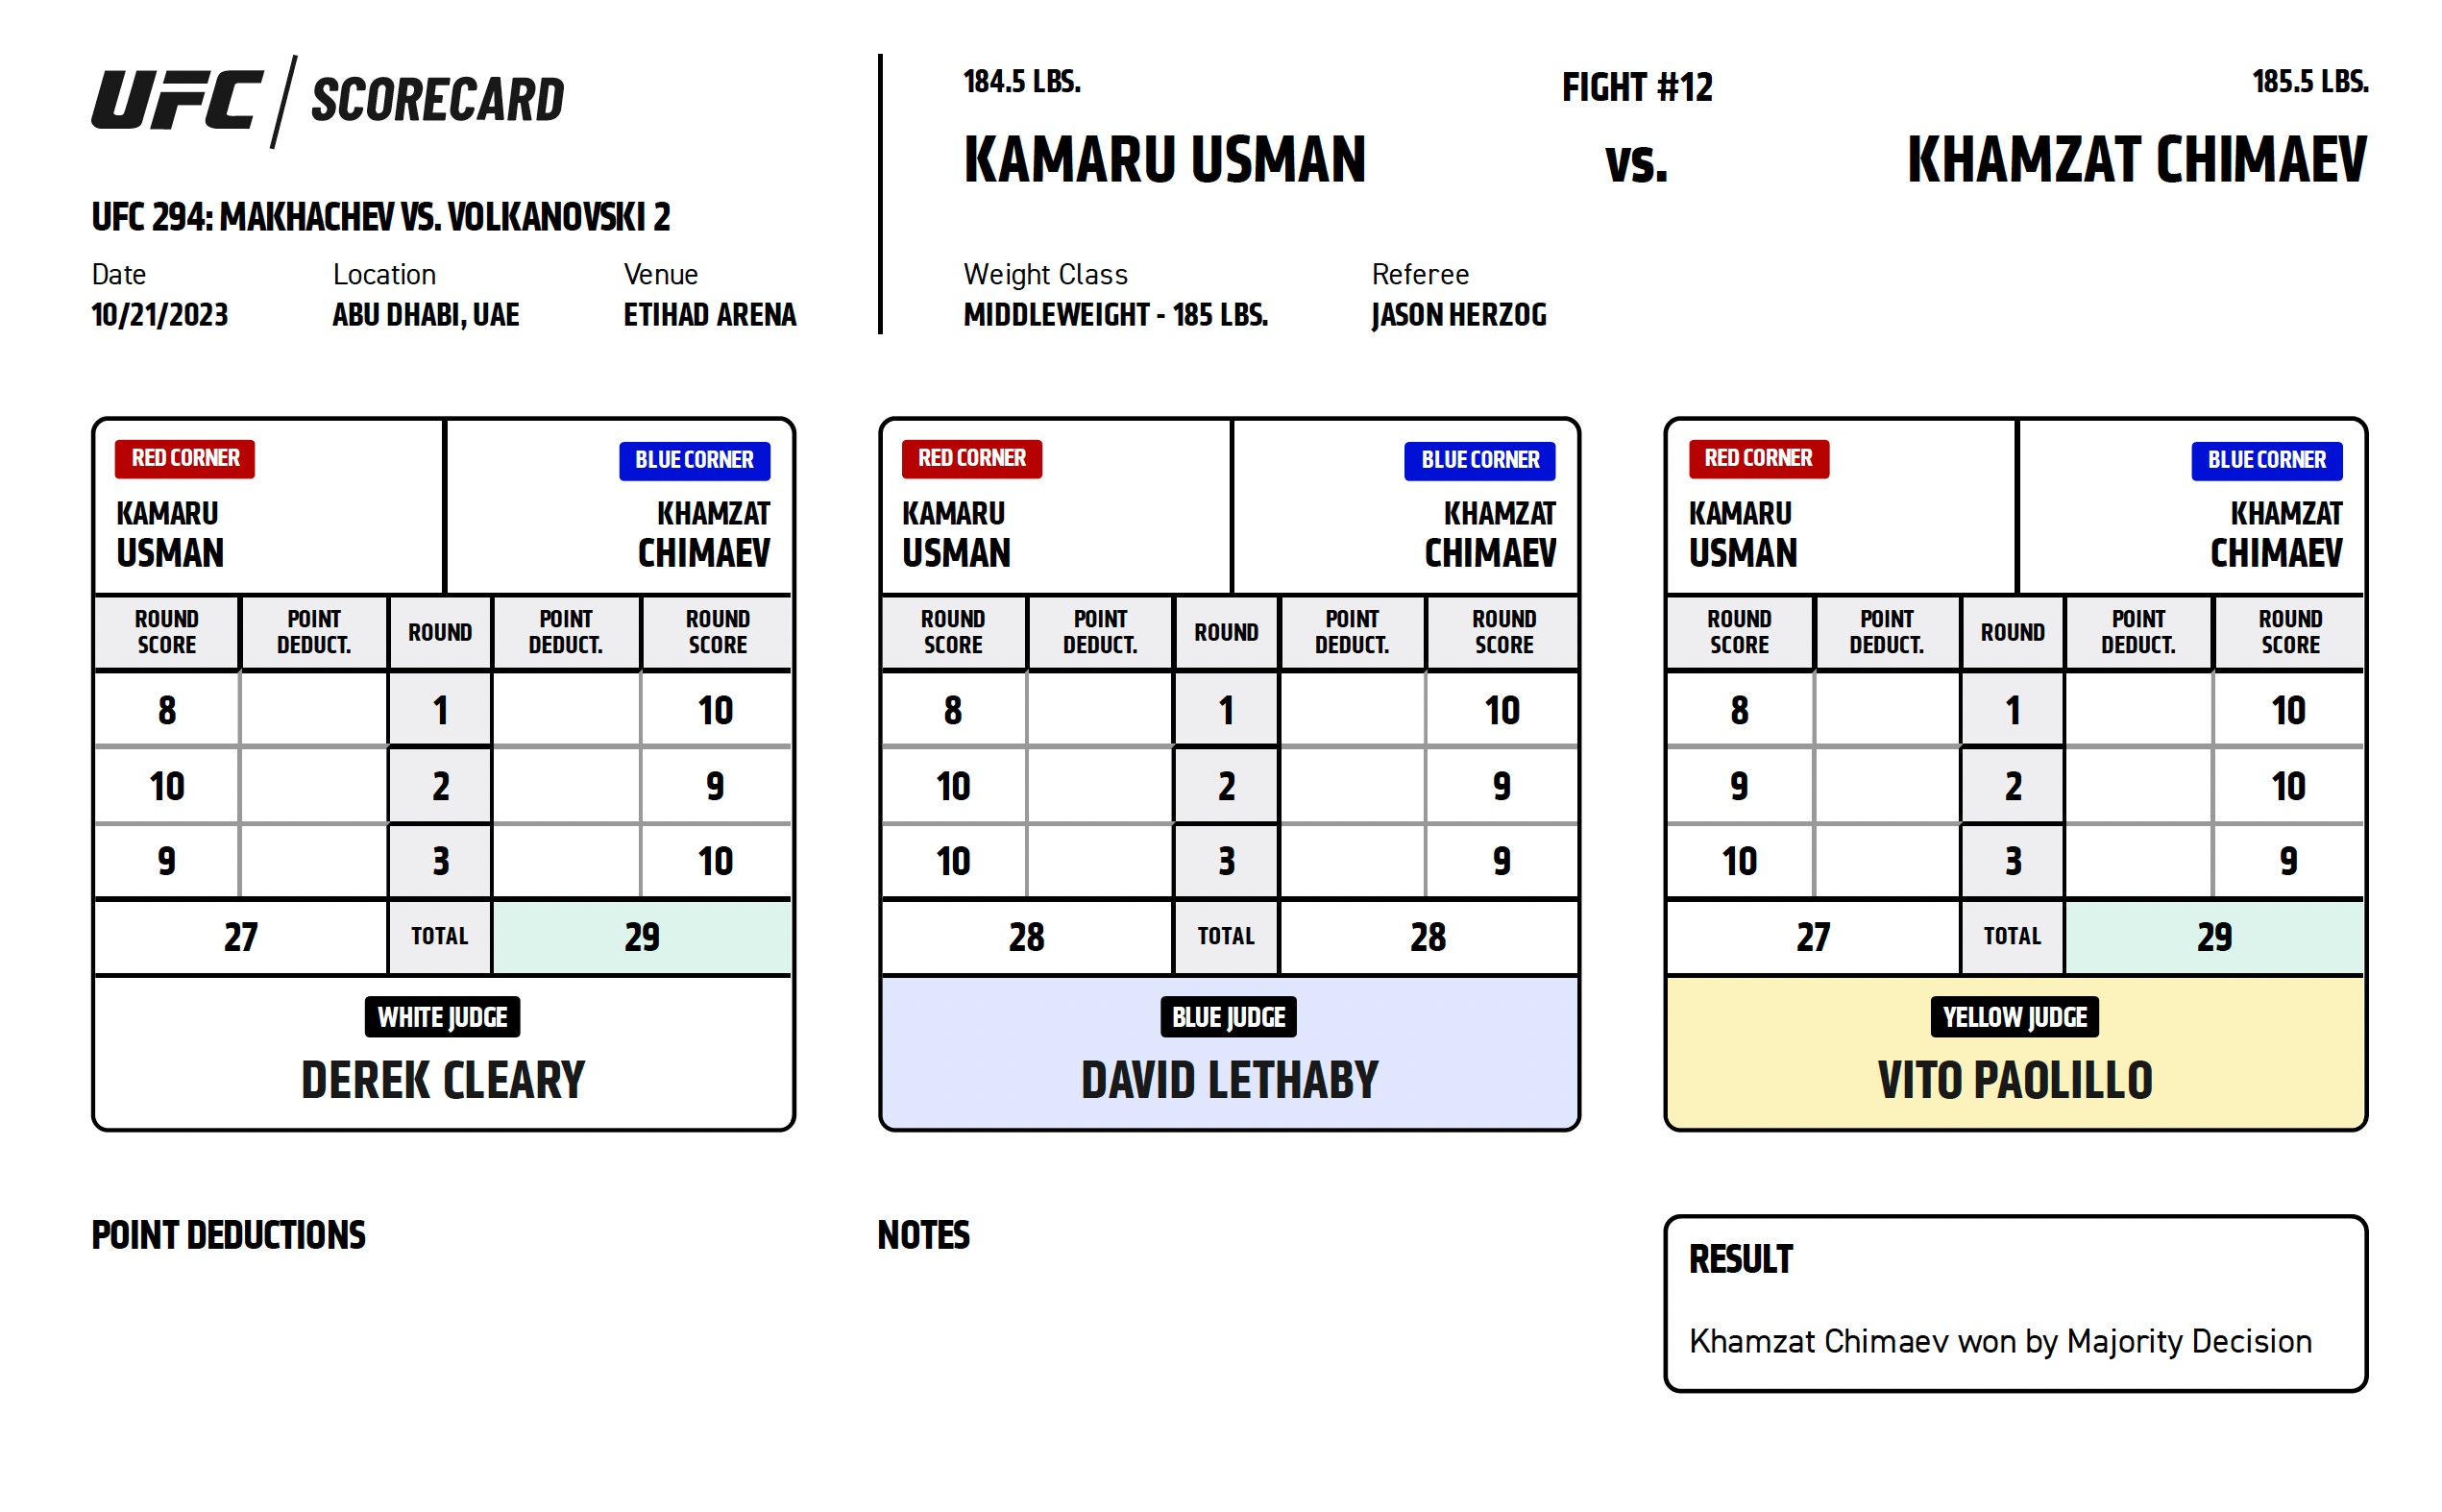 Scorecard : Combat Categorie - Poids Moyens : Kamaru Usman vs. Khamzat Chimaev - UFC 294 - MAKHACHEV VS. VOLKANOVSKI 2